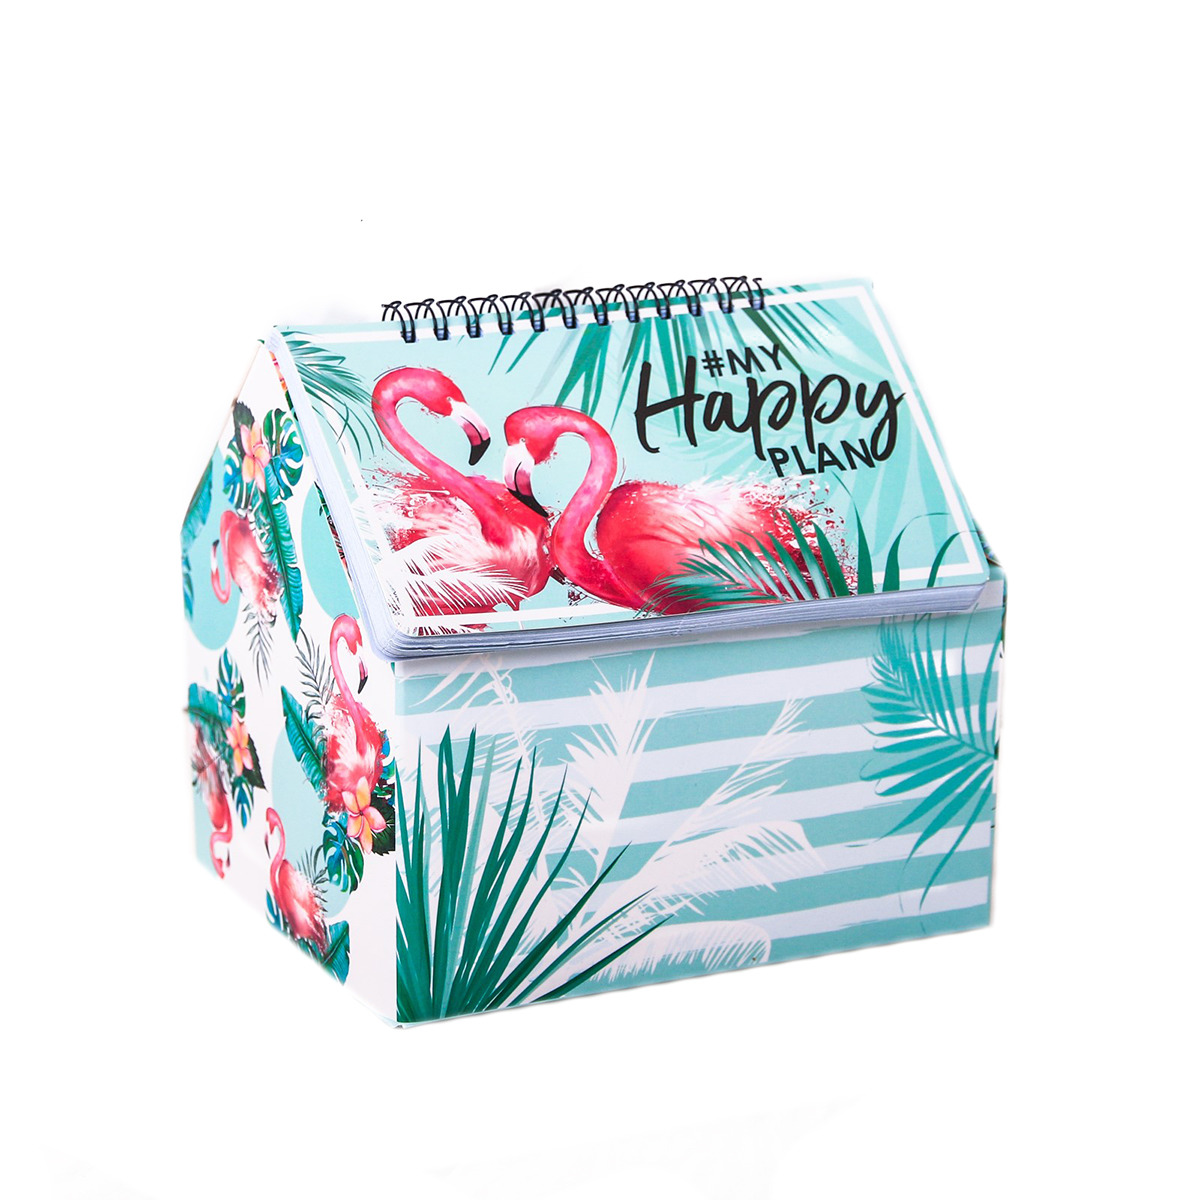 фото Канцелярский набор ArtFox Шкатулка - домик Фламинго, с планером, 4121894, бирюзовый